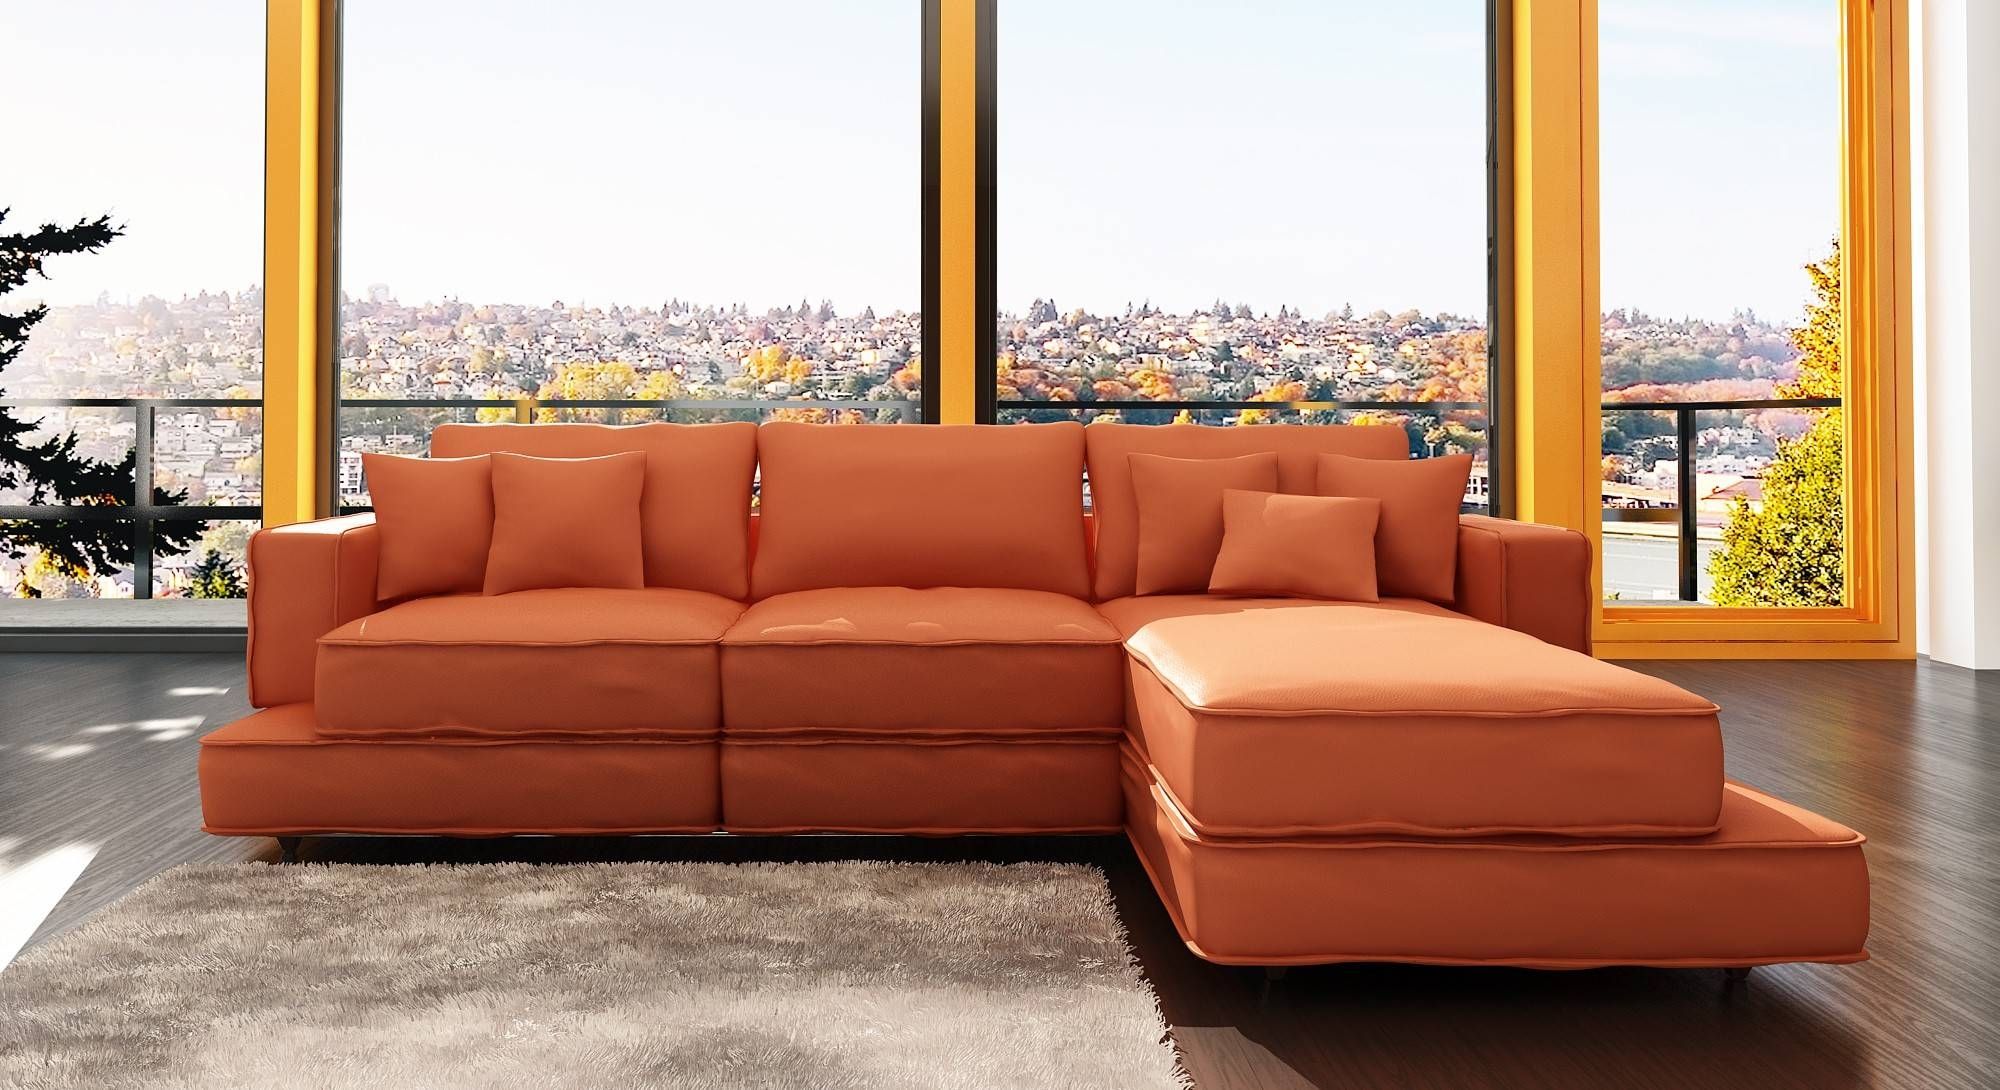 Living Room Sofa Orange Leather Burnt Set Badcockorange And For Burnt Orange Sectional Sofas (View 11 of 15)